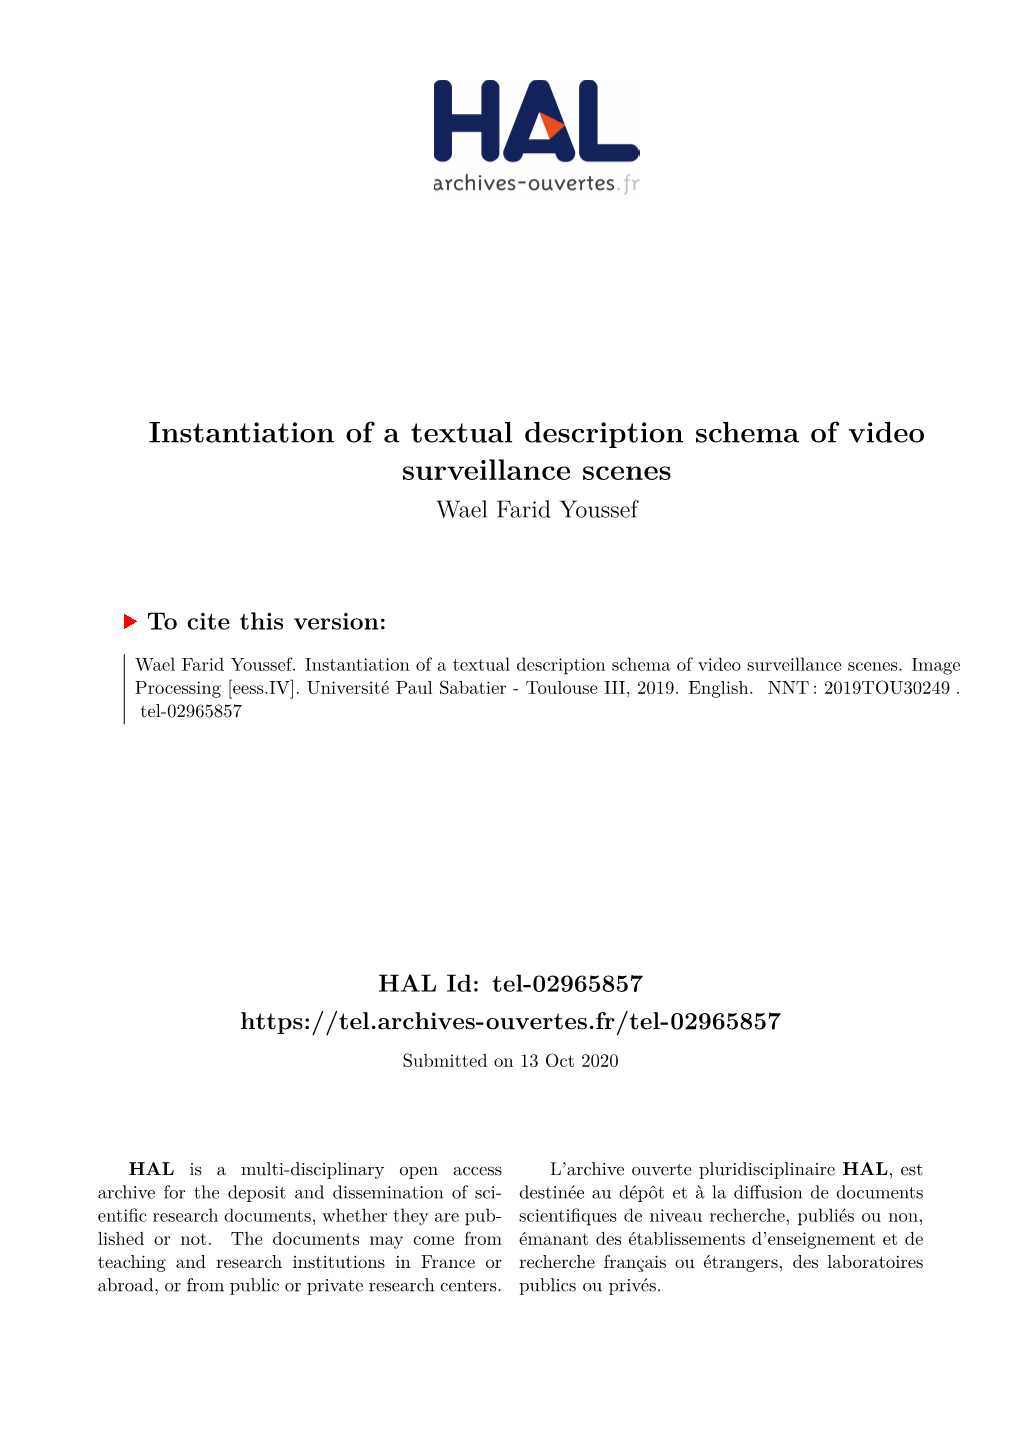 Instantiation of a Textual Description Schema of Video Surveillance Scenes Wael Farid Youssef